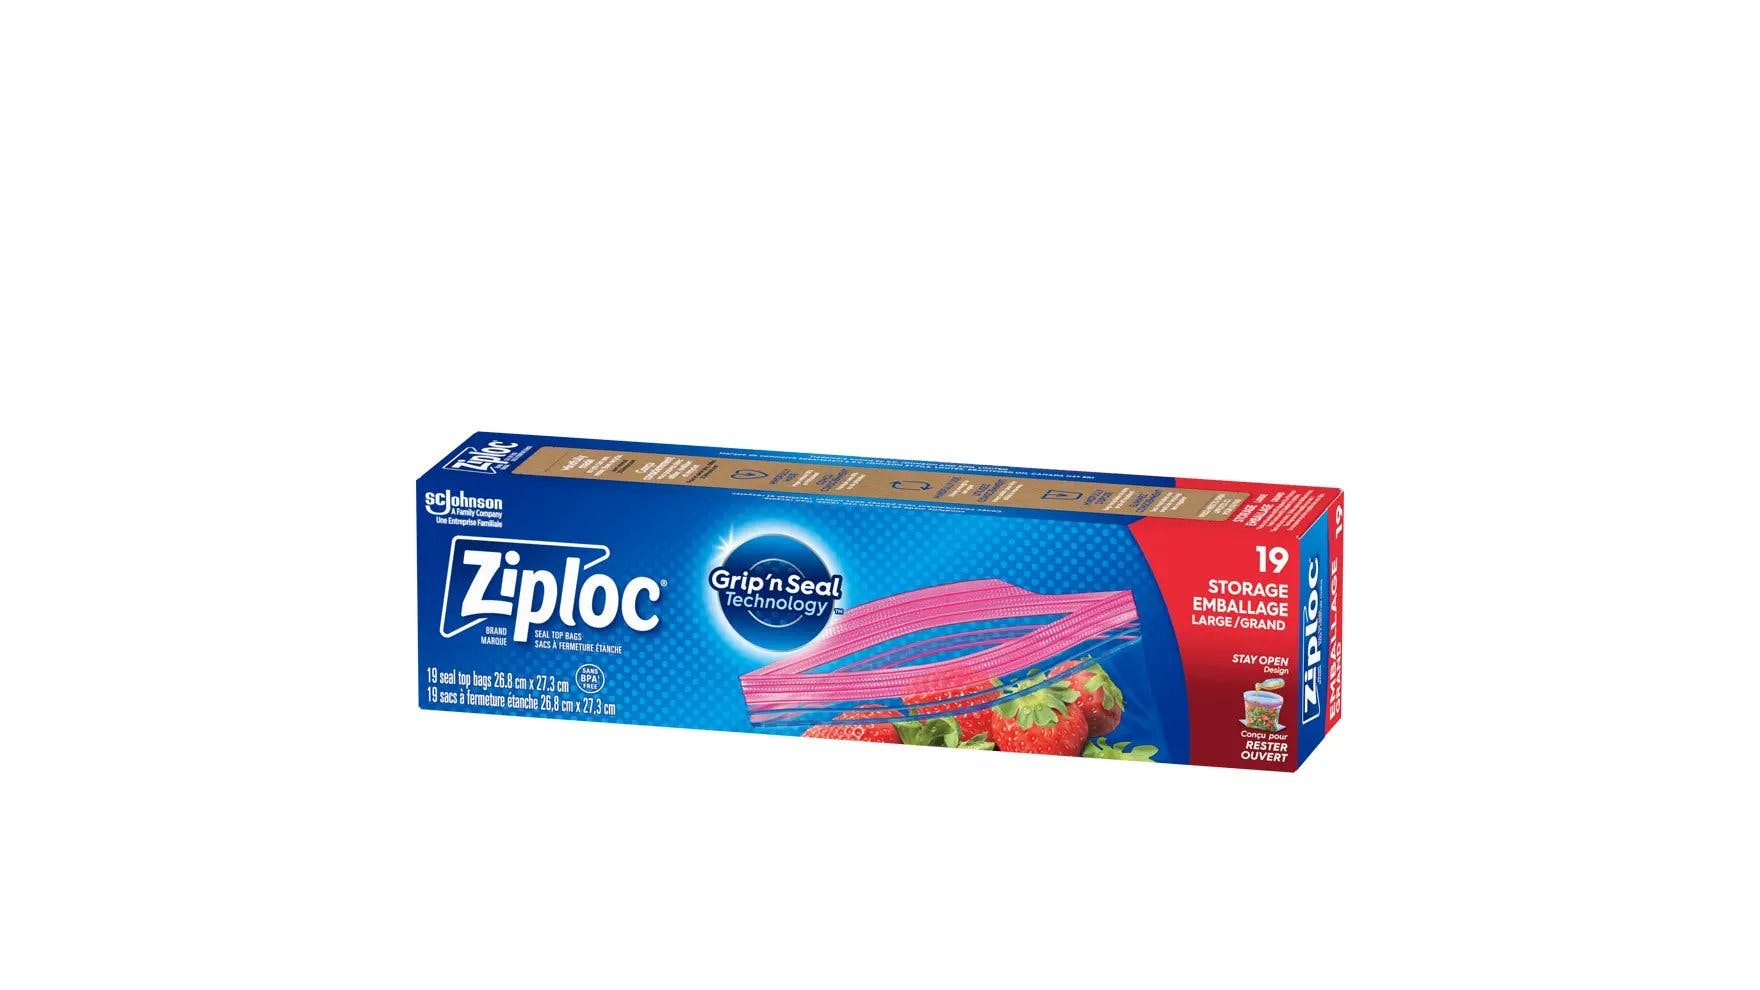 Angle of Ziploc large storage bags box